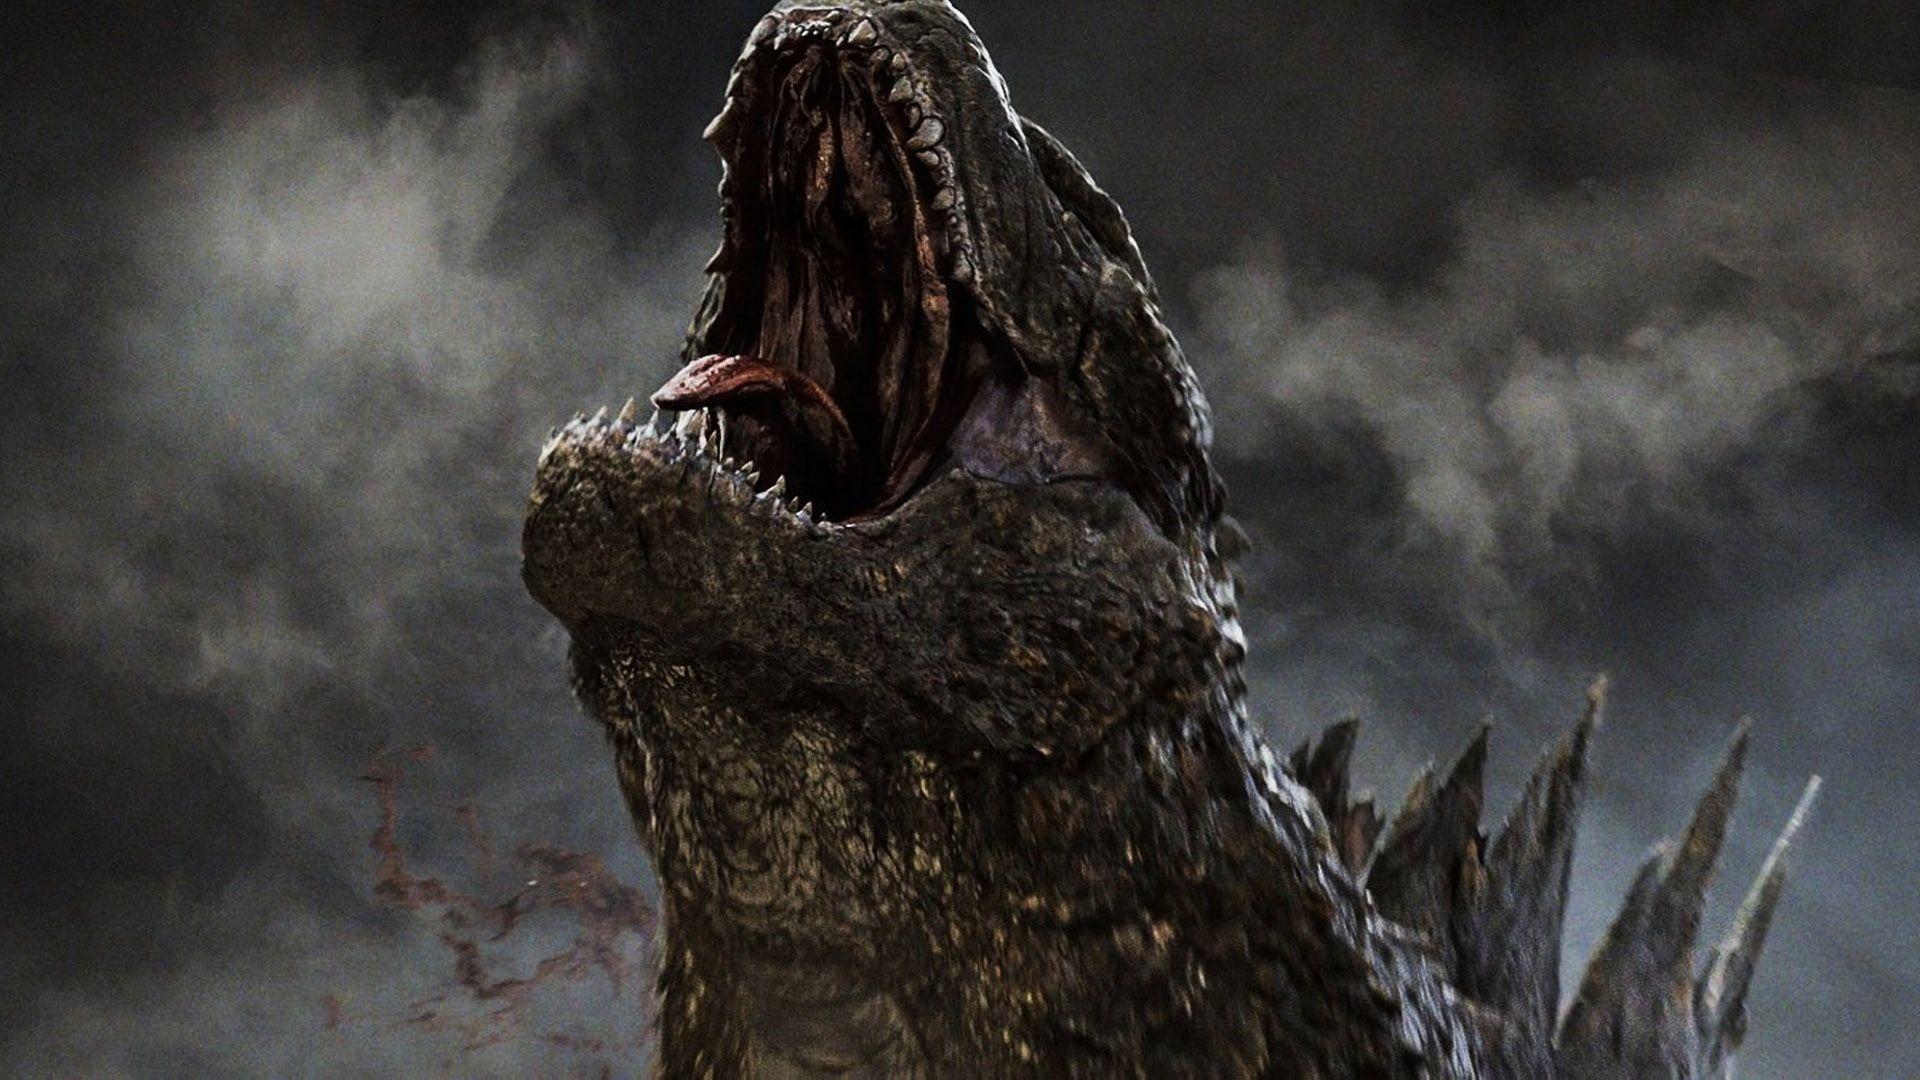 Godzilla Roaring 2014 Movie Wallpaper Wide or HD